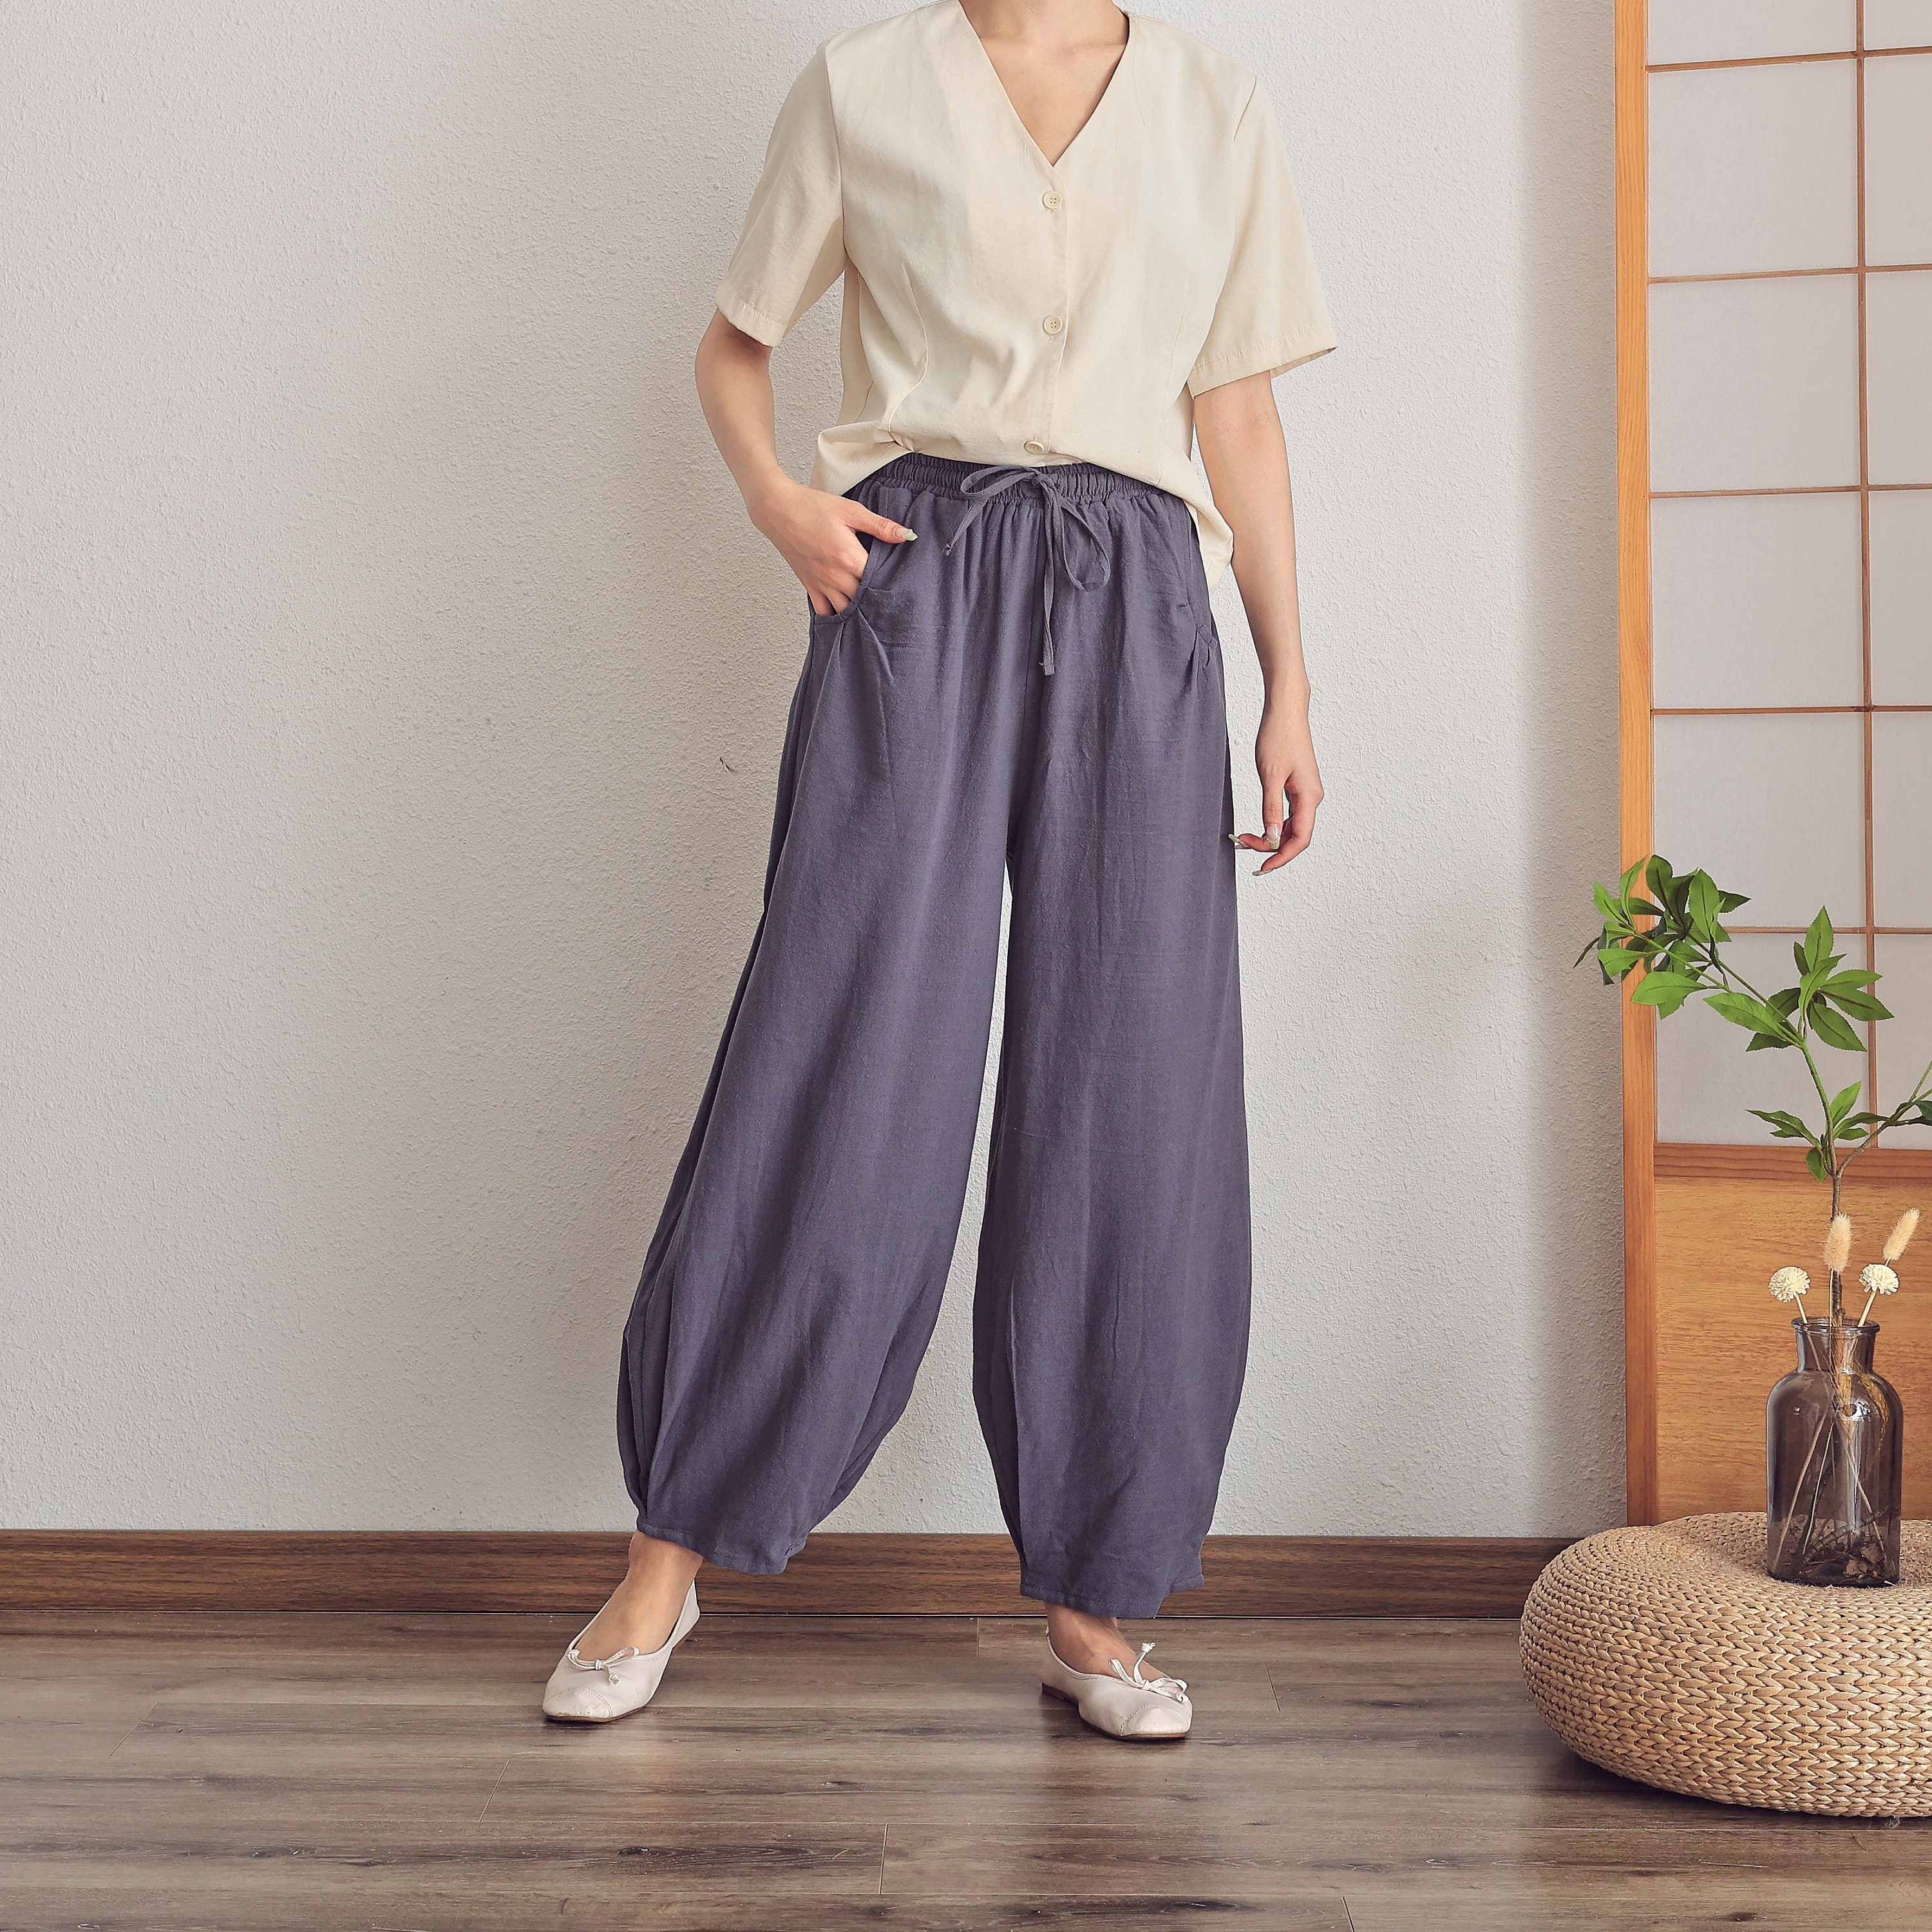 YOTAMI Womens Pant Fashion Summer Casual Loose Pocket Solid